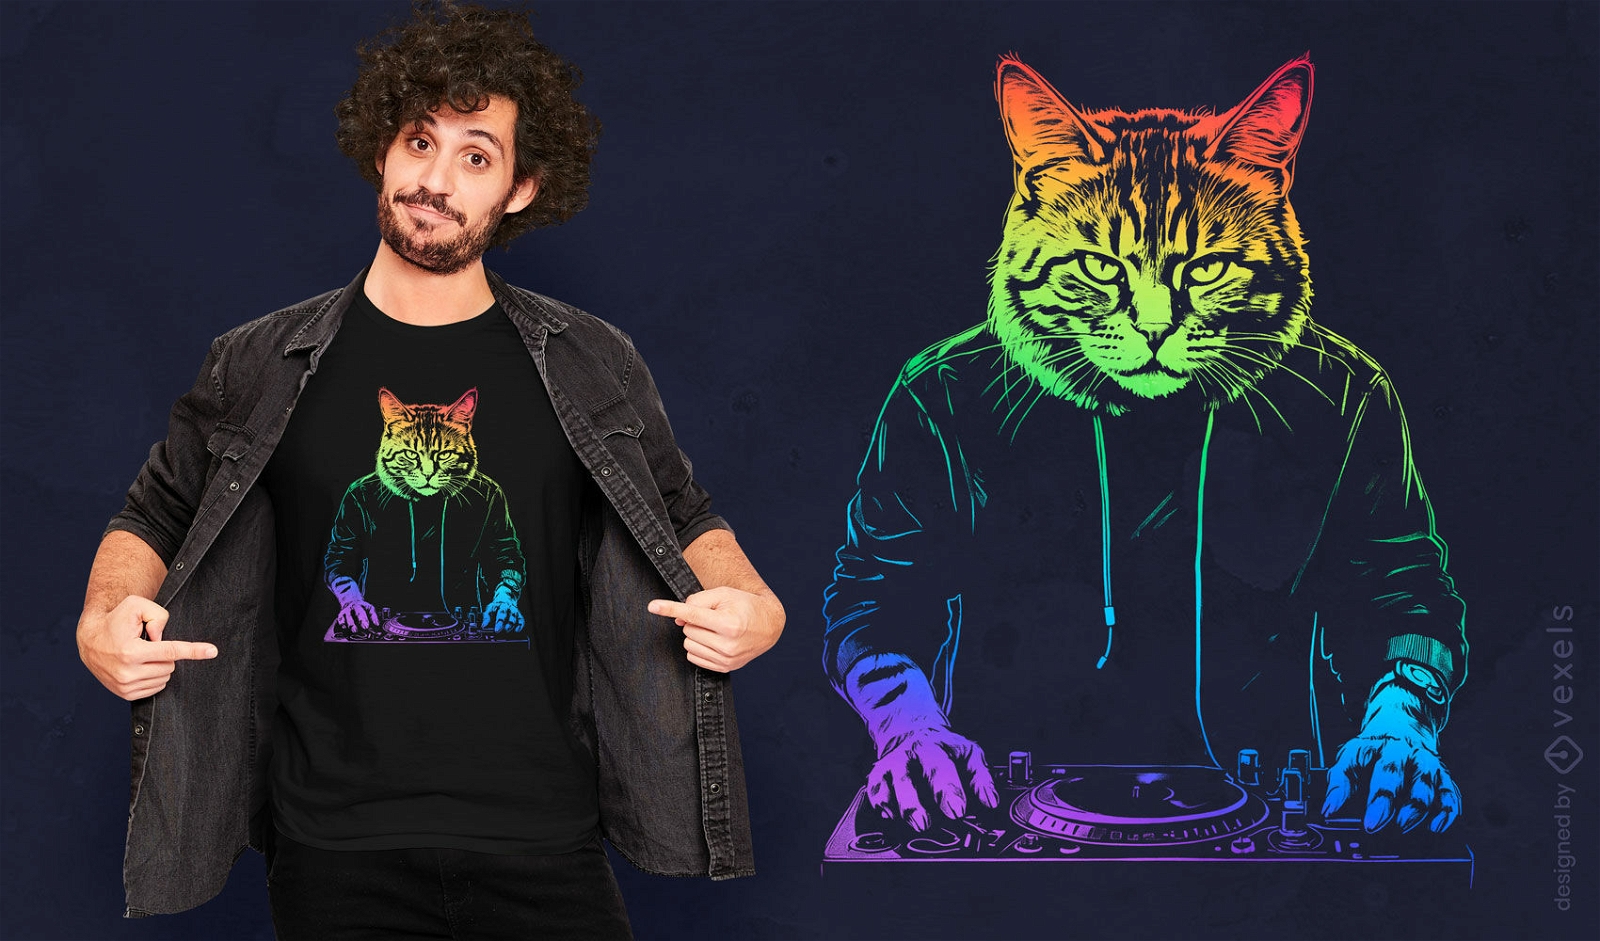 Neon cat DJ t-shirt design